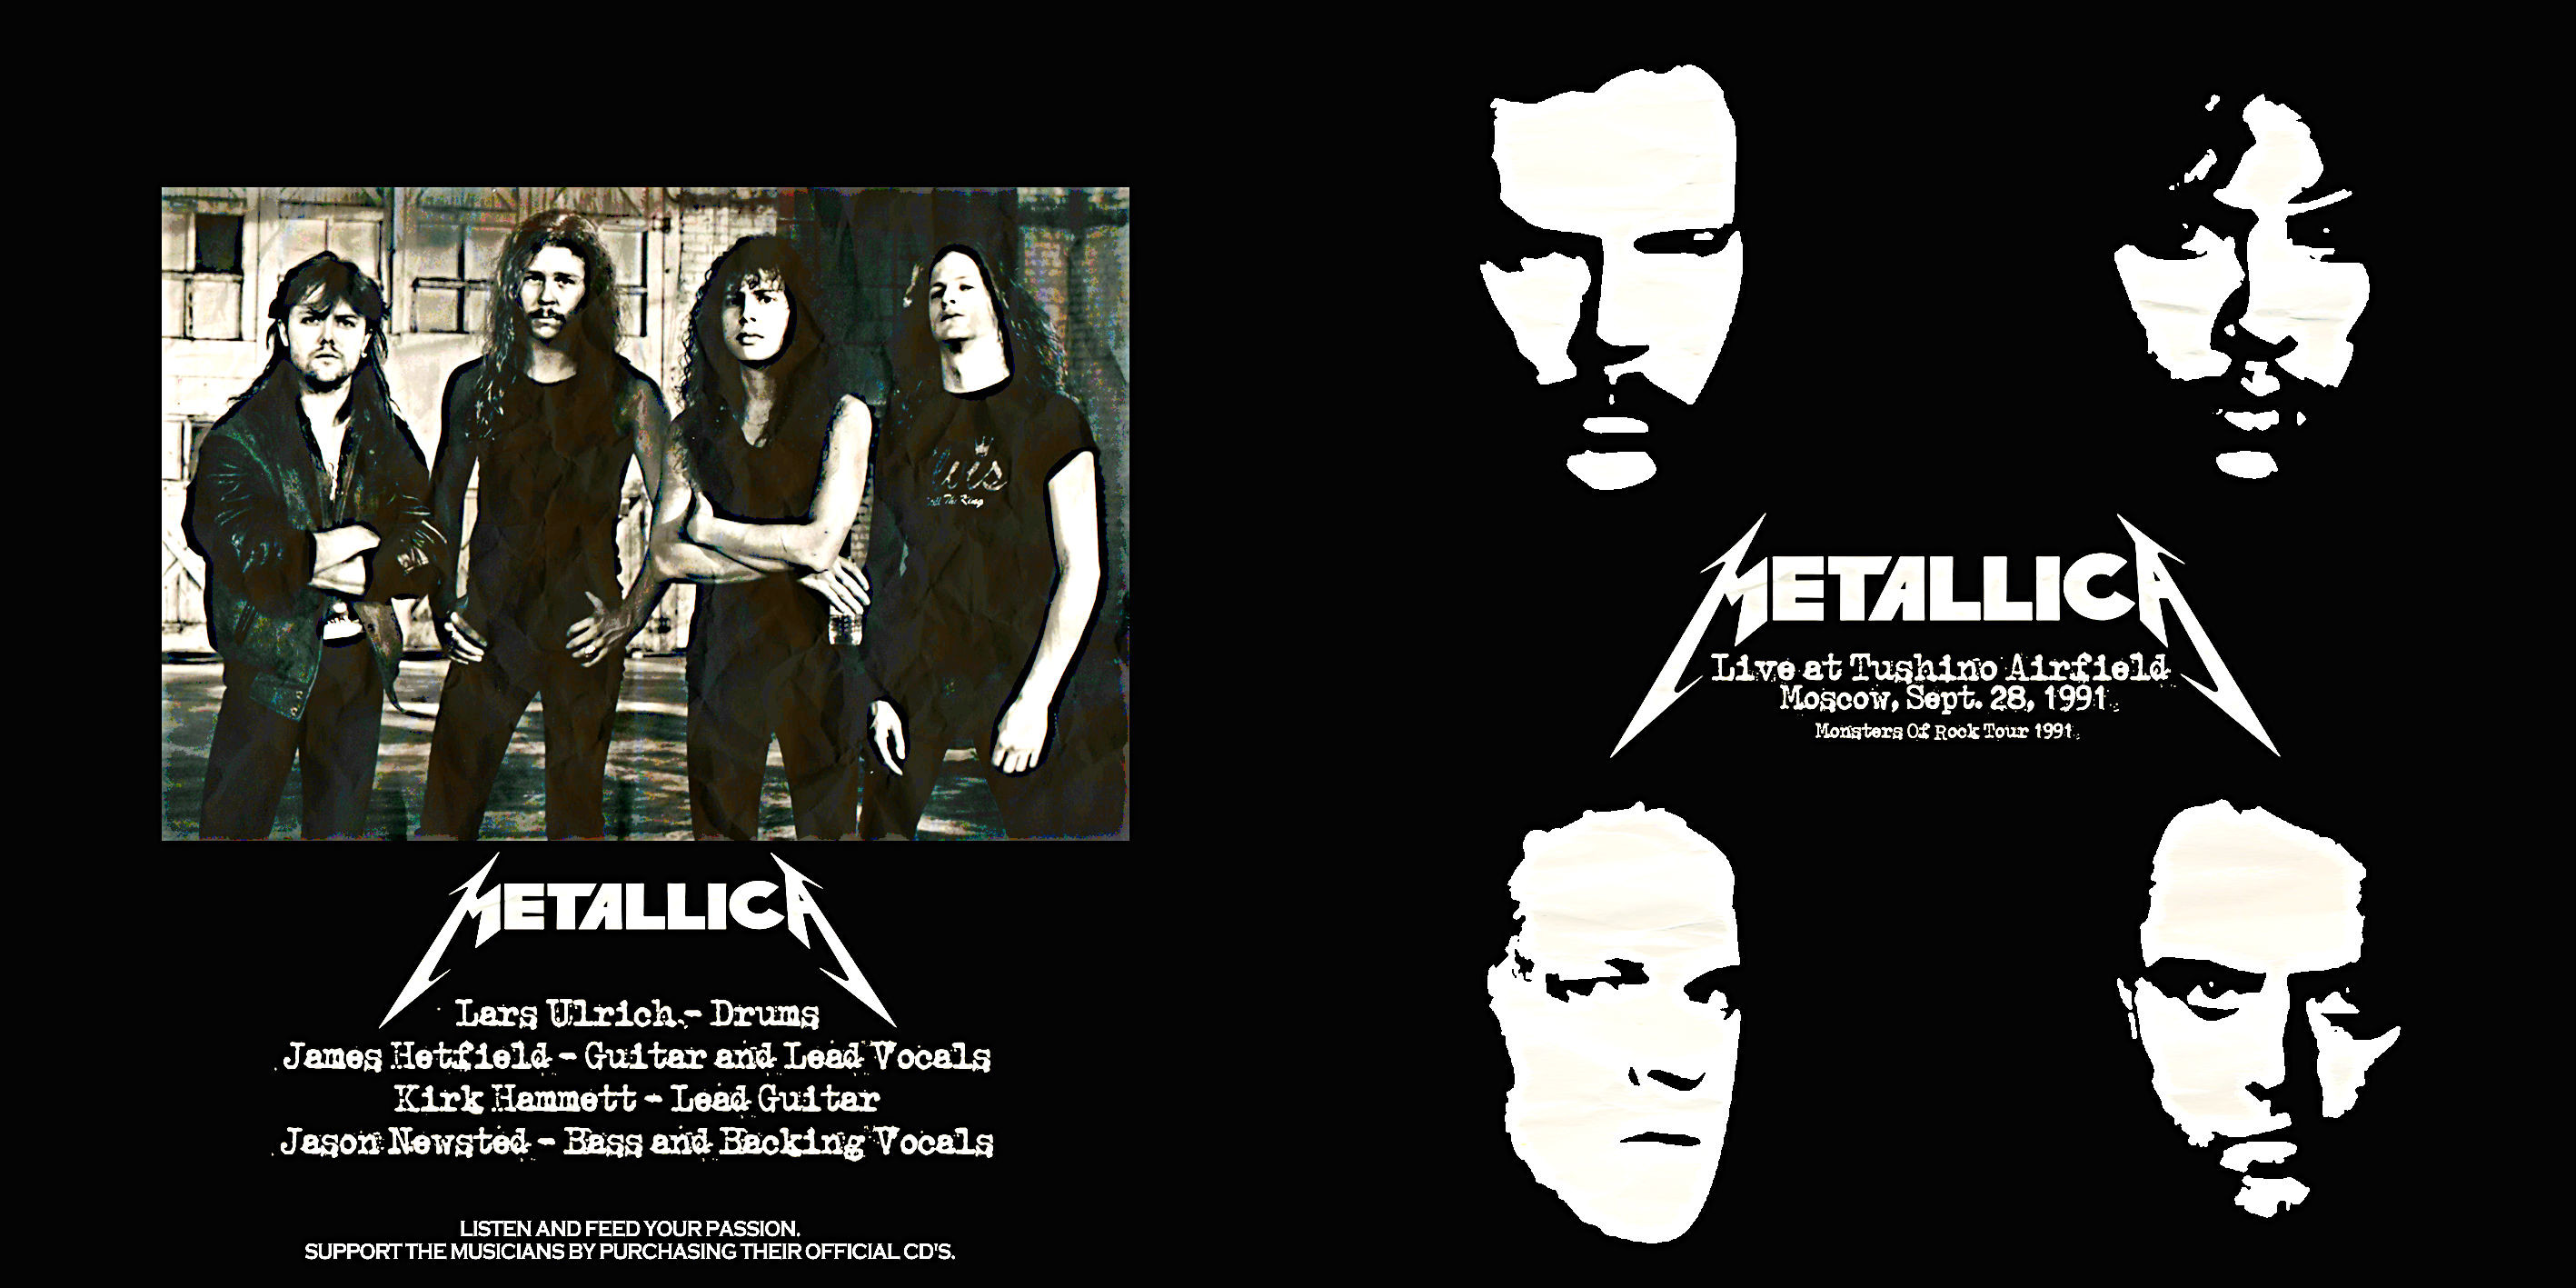 2835x1417 METALLICA thrash metal heavy album cover art poster posters concert  concerts gw wallpaper |  | 121737 | WallpaperUP